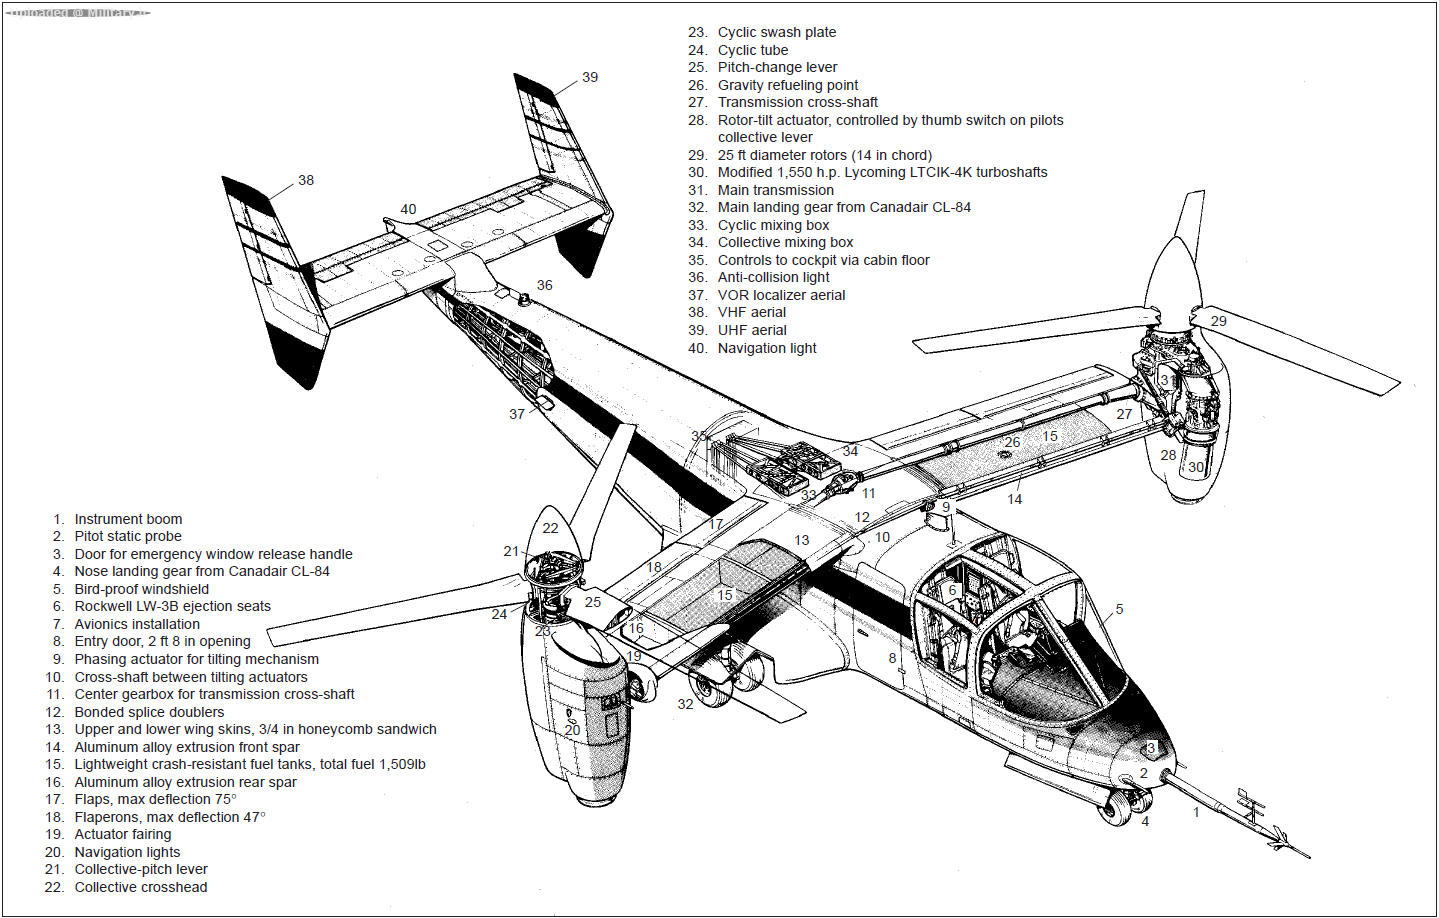 Bell_XV-15_tilt_rotor_research_aircraft.